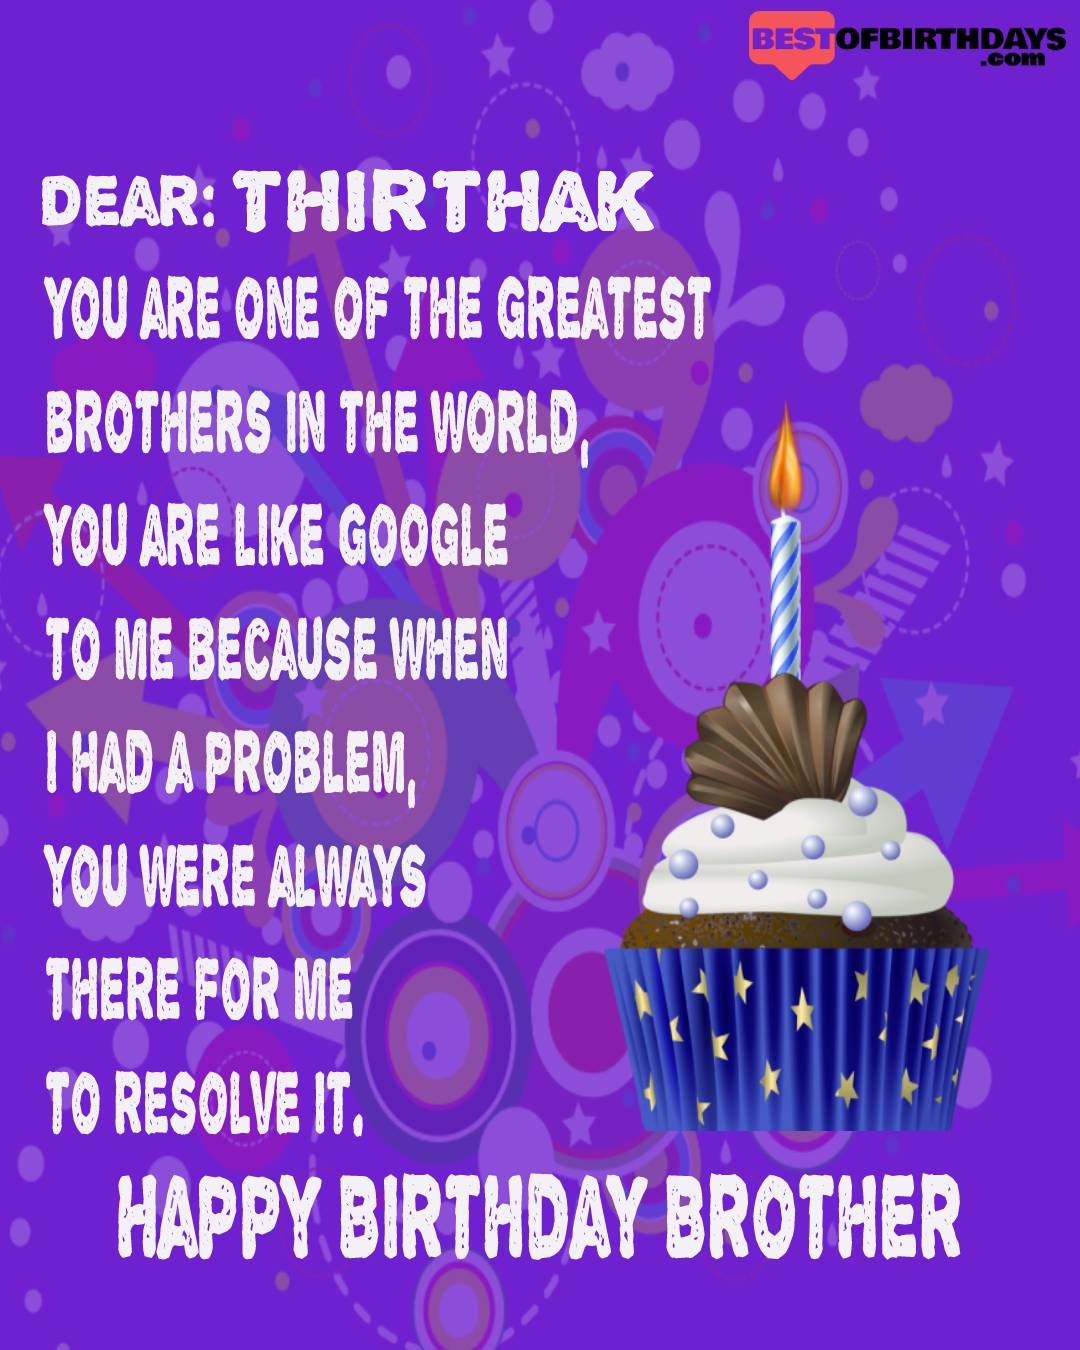 Happy birthday thirthak bhai brother bro